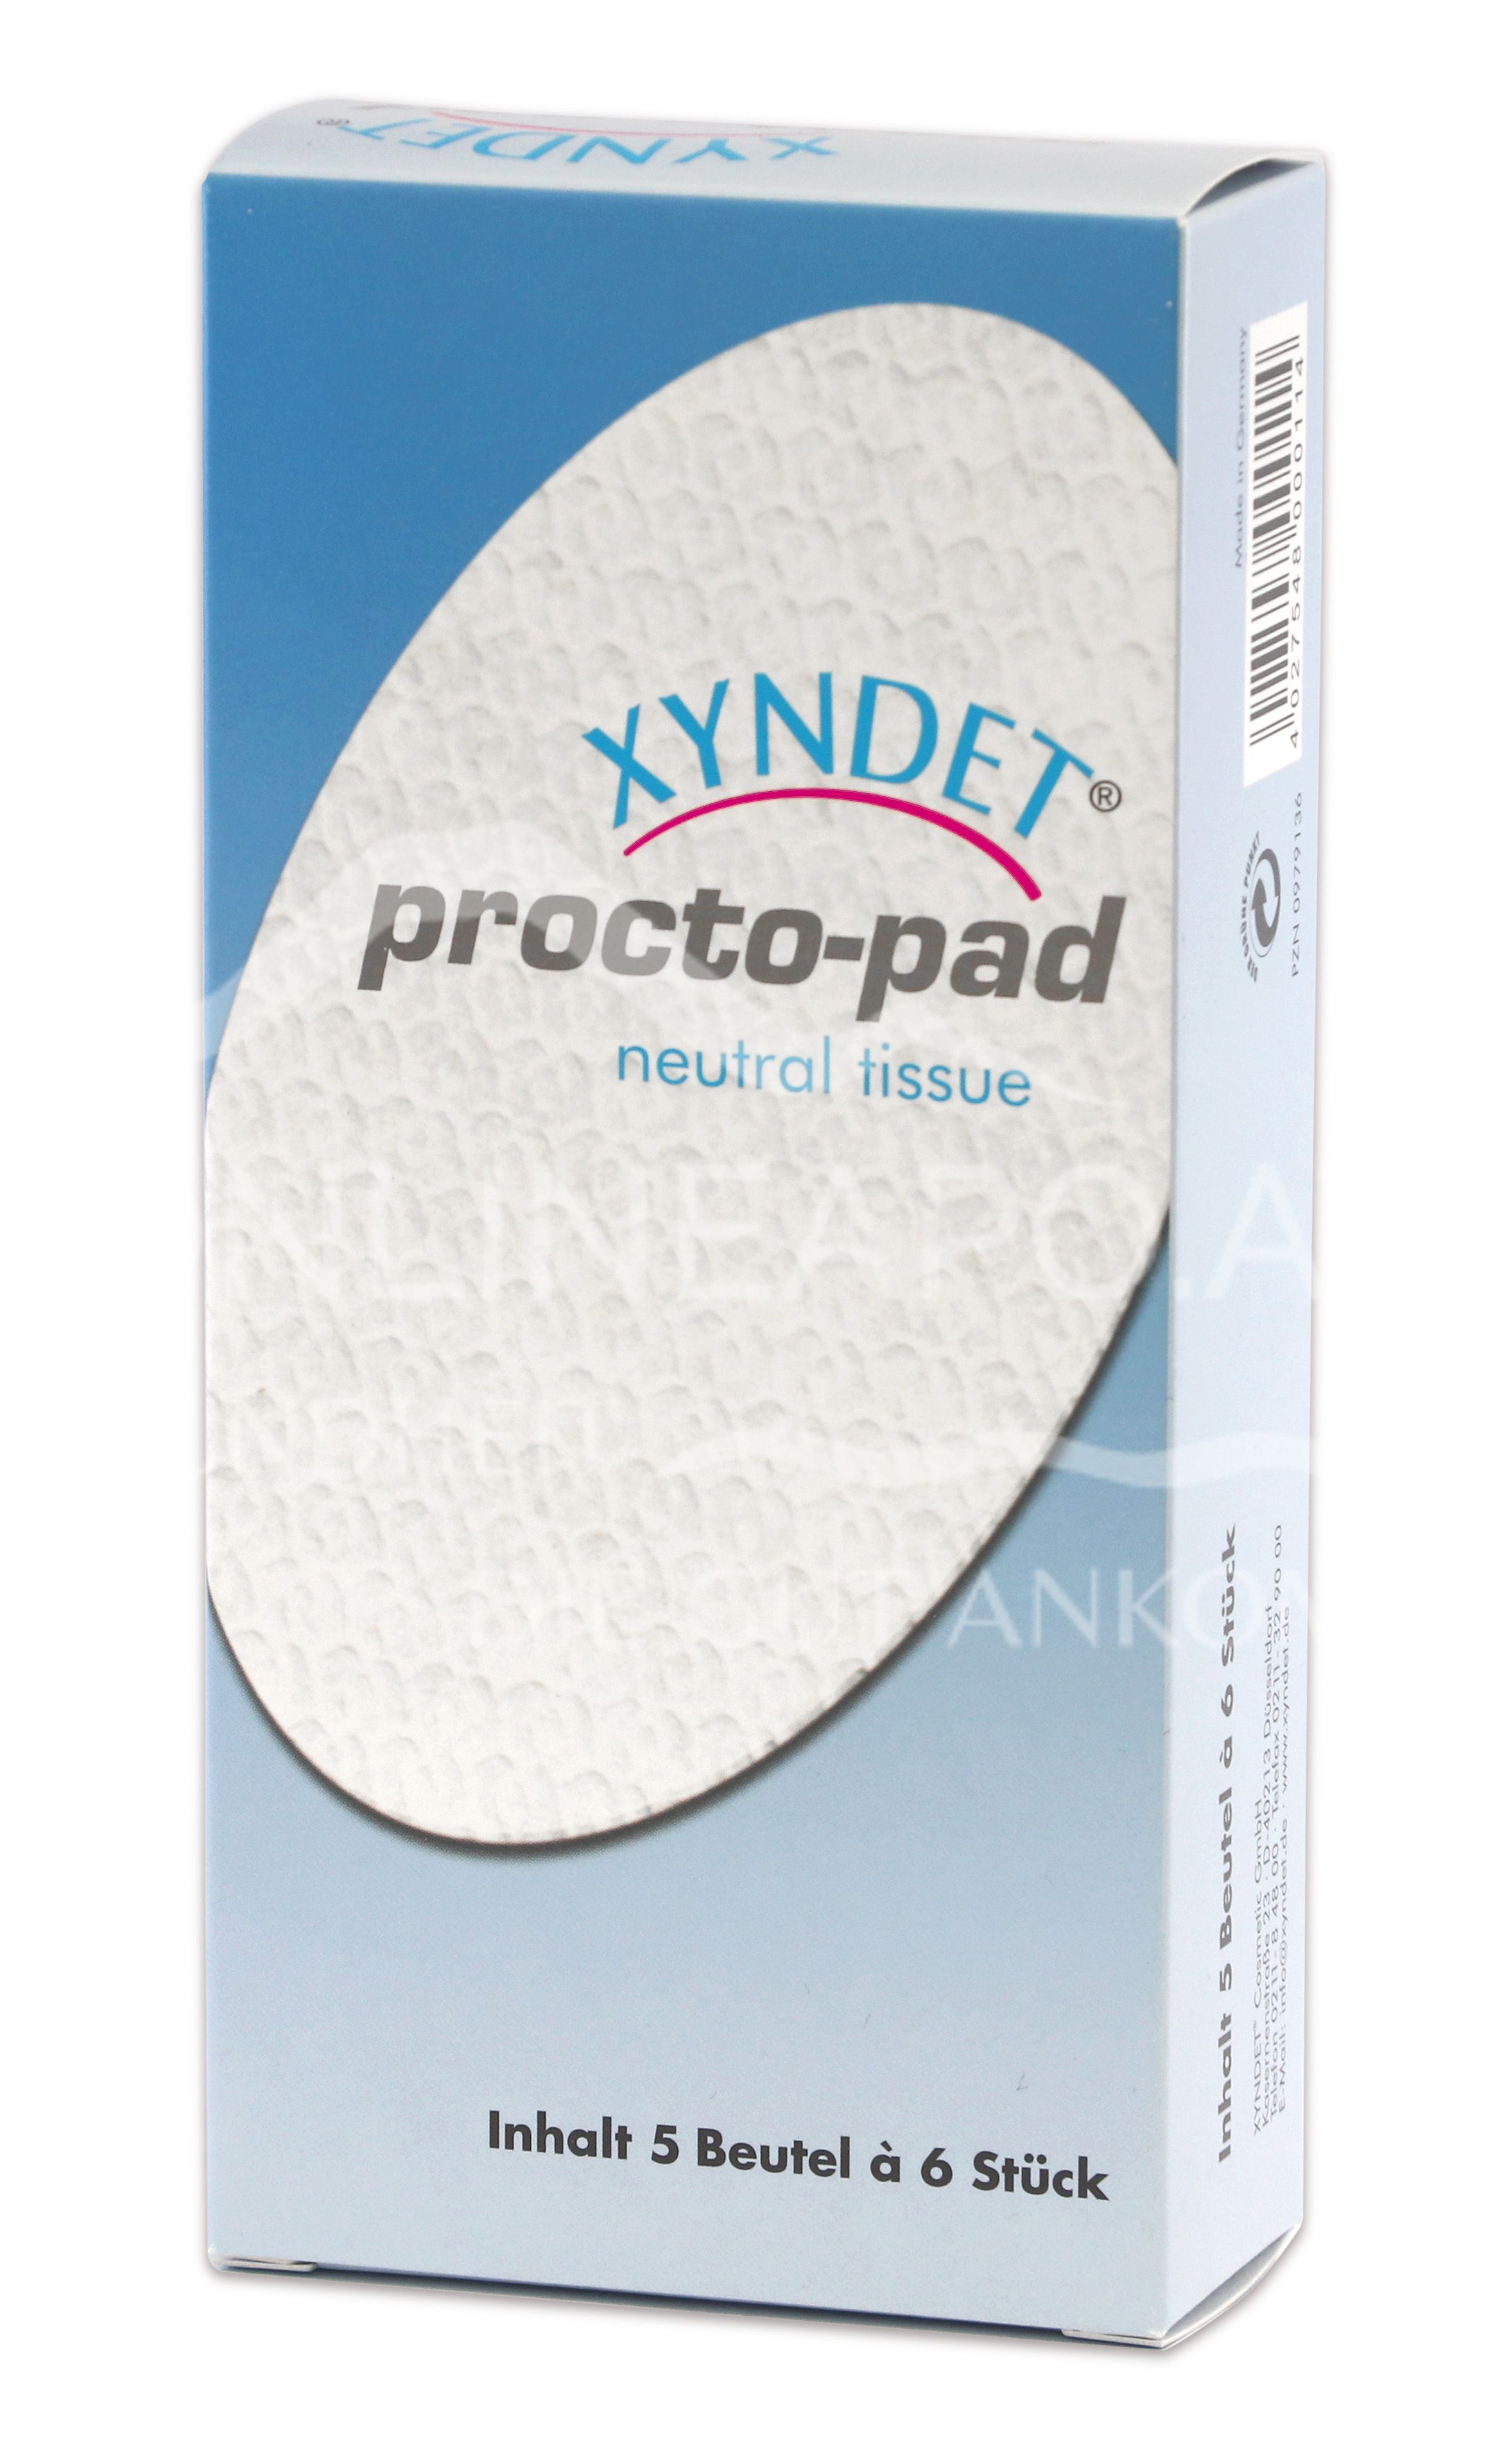 XYNDET procto-pad